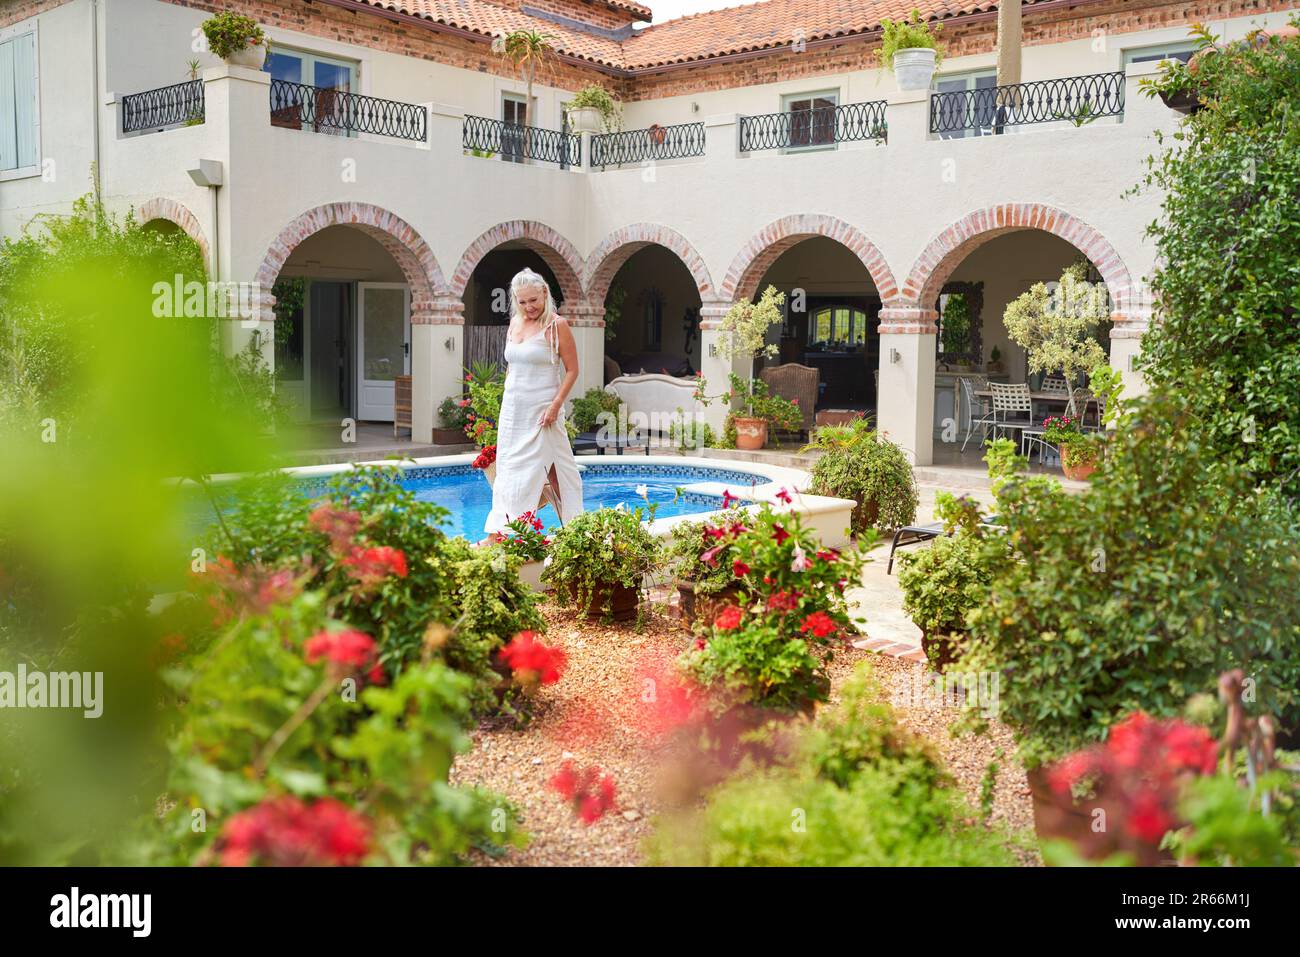 Senior woman walking along swimming pool in summer villa garden Stock Photo